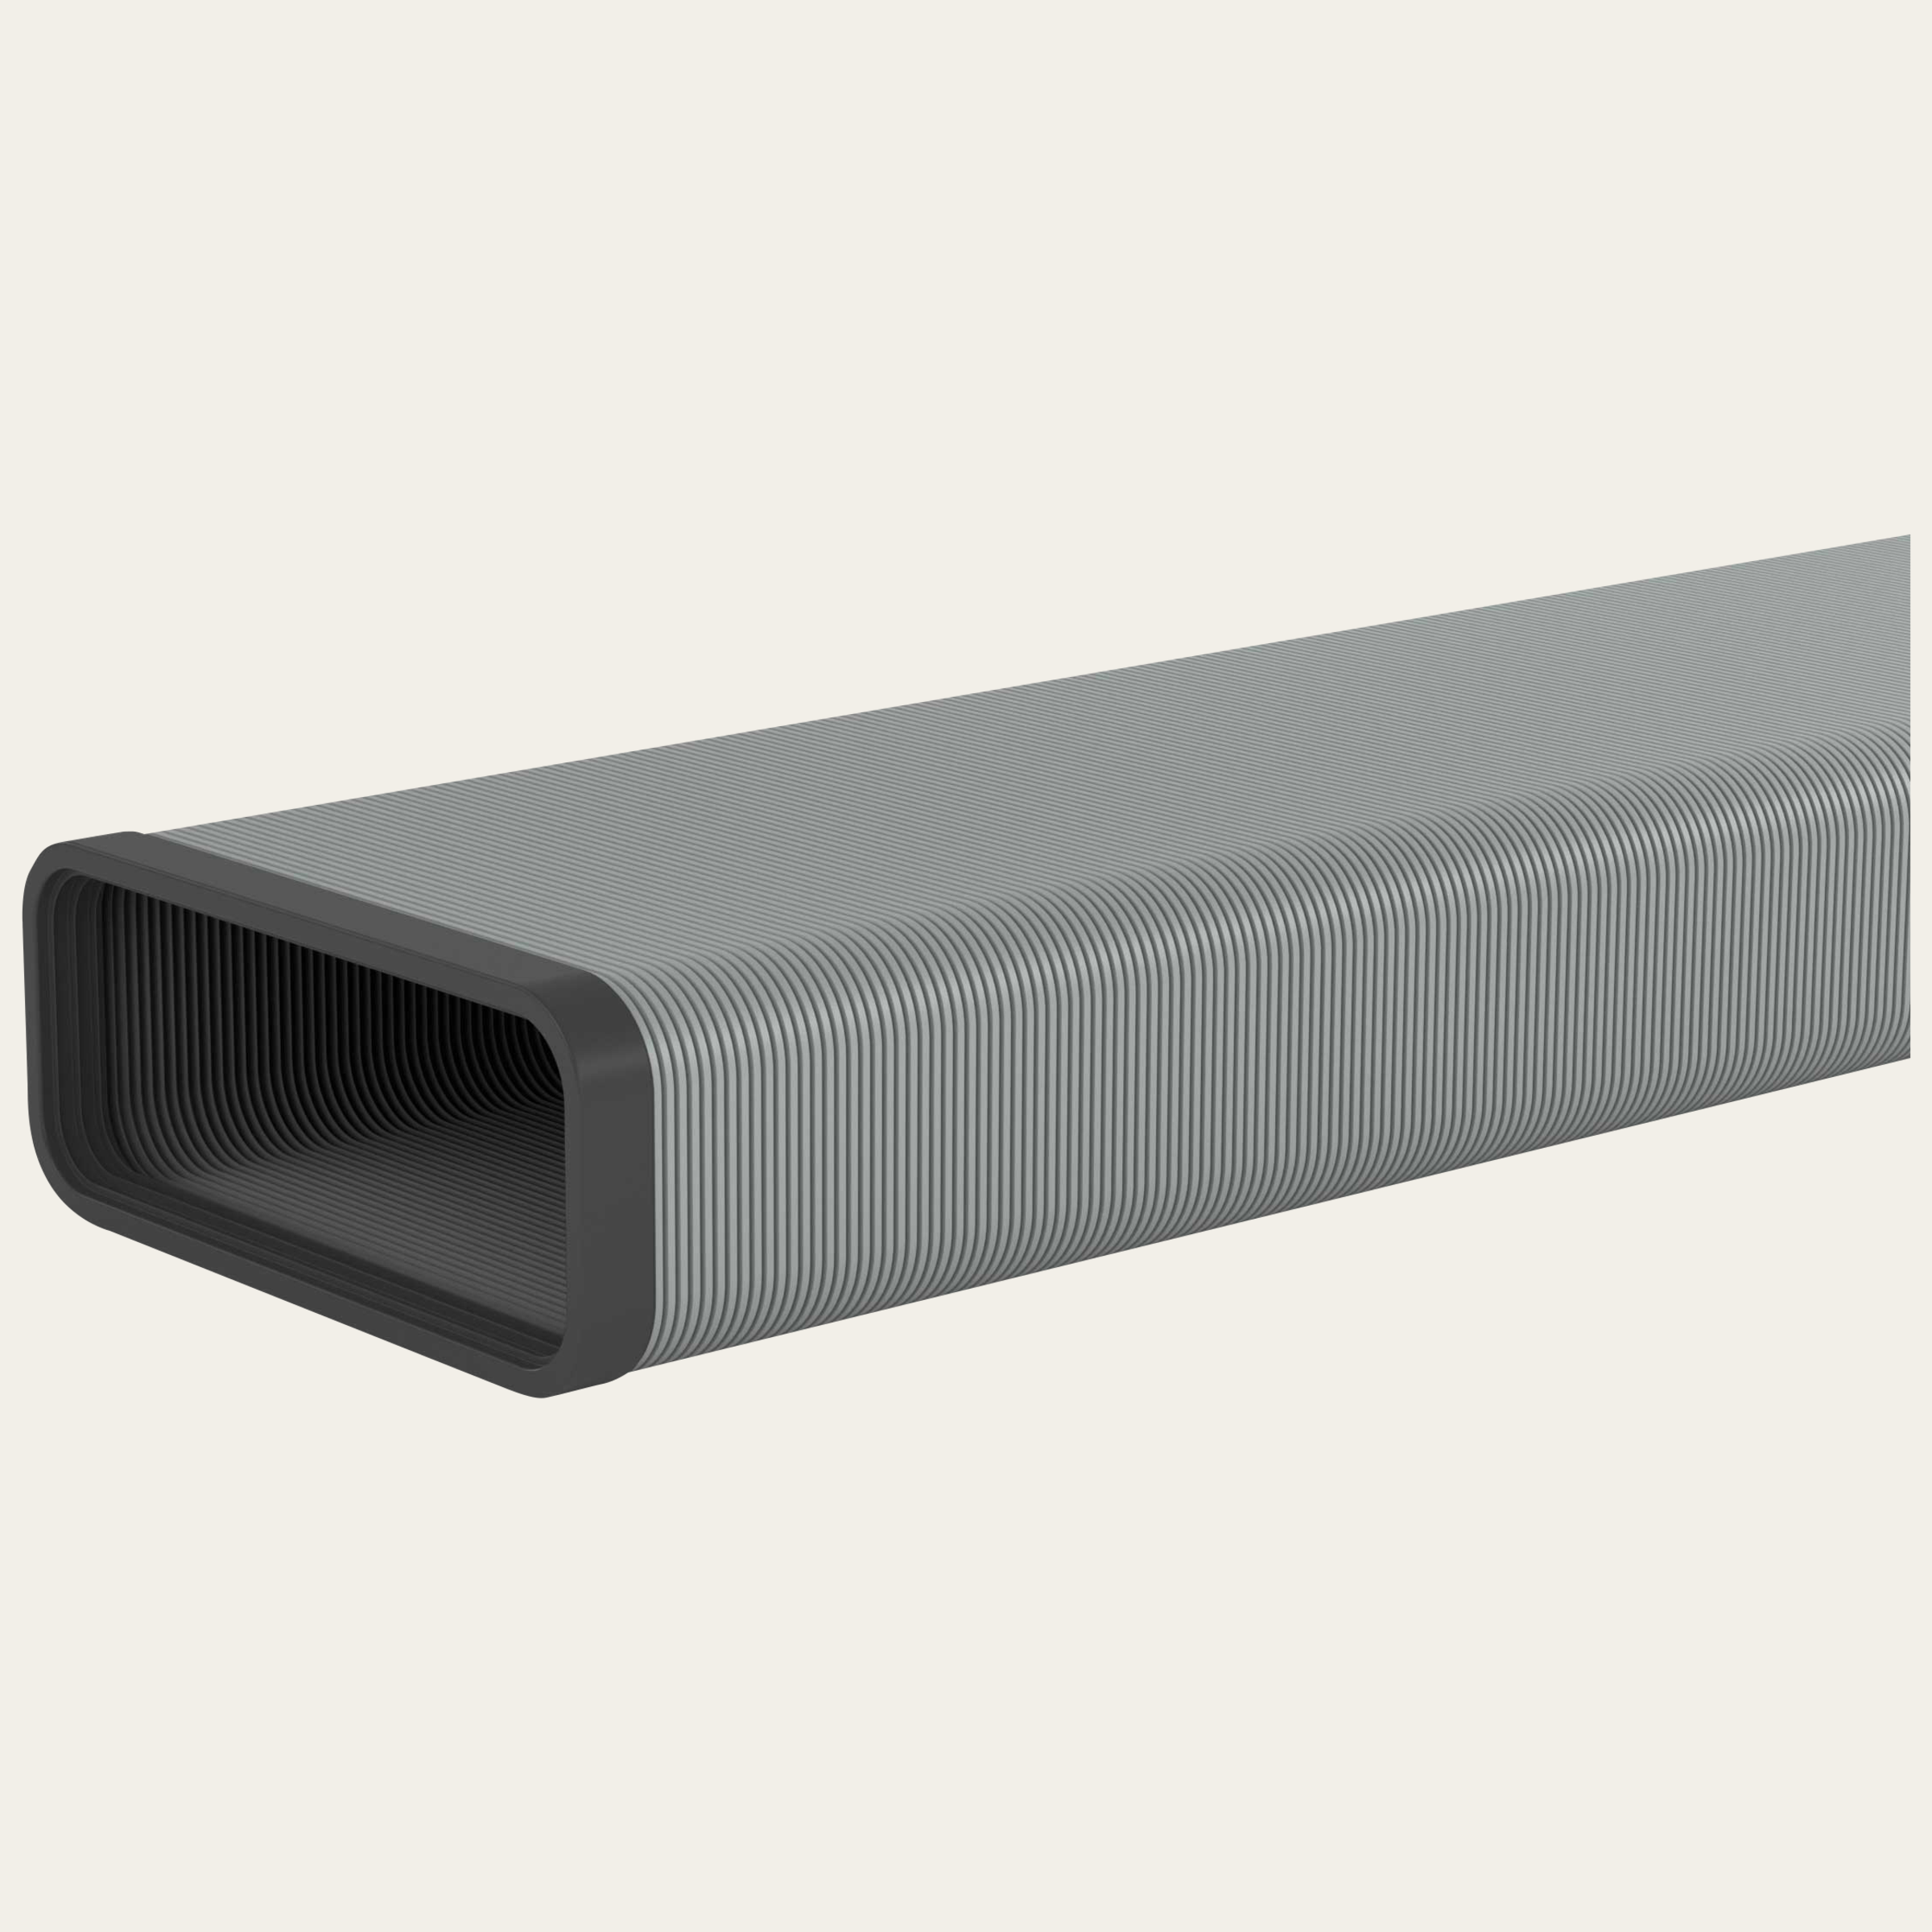 Air duct, flexible flat channel, W 222 x H 89 x D 1000 mm